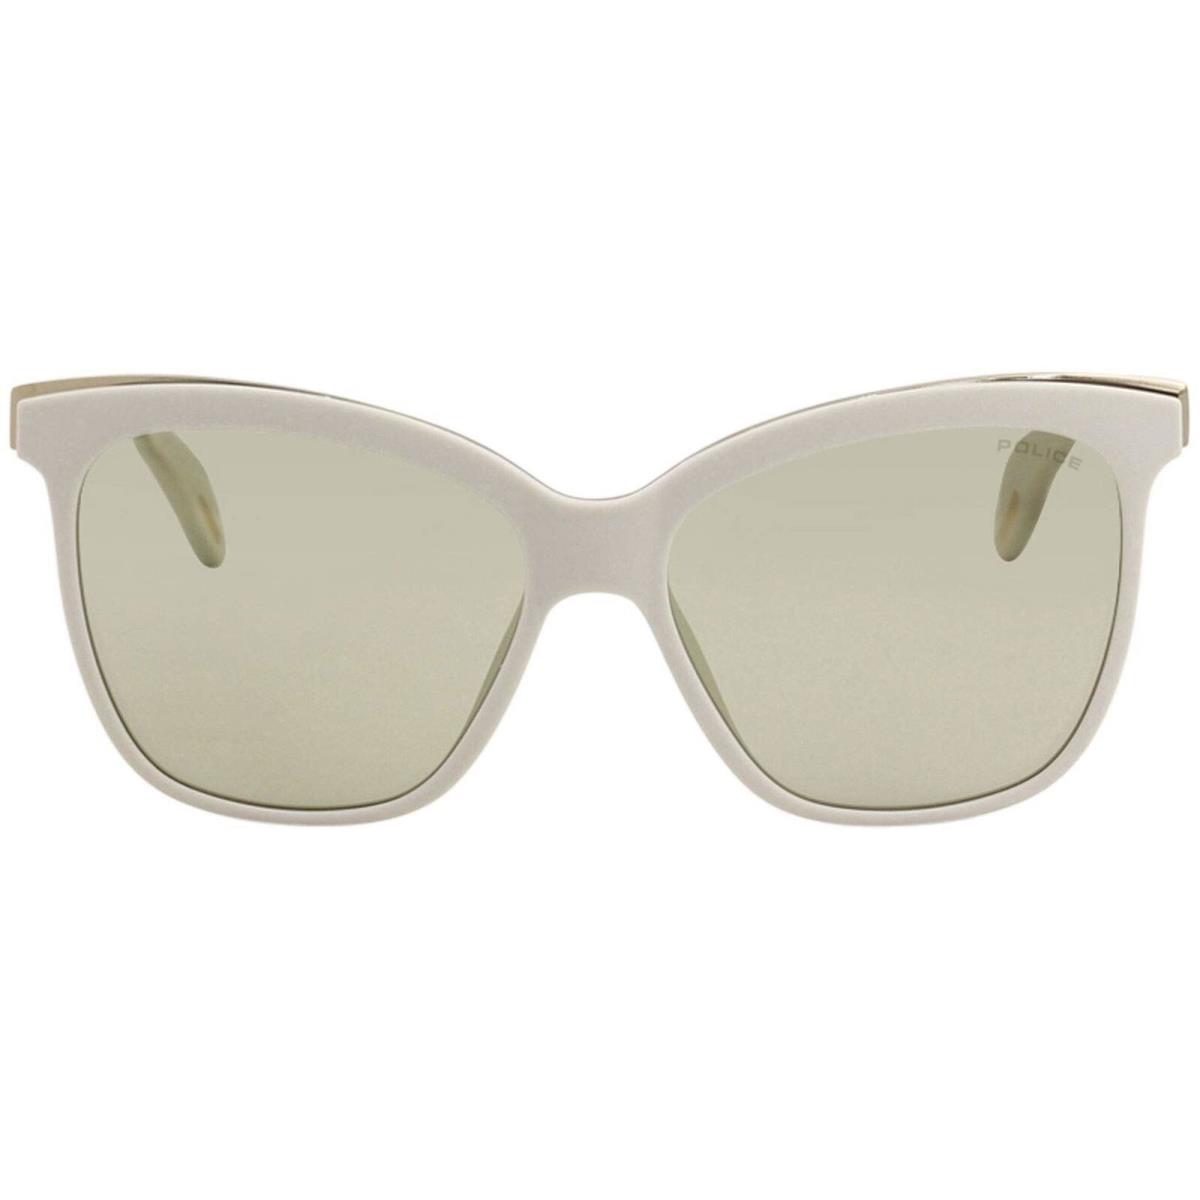 Police Women`s Affair-2 SPL621 SPL/621 3GFG White Fashion Square Sunglasses 56mm - Frame: White, Lens: Gray